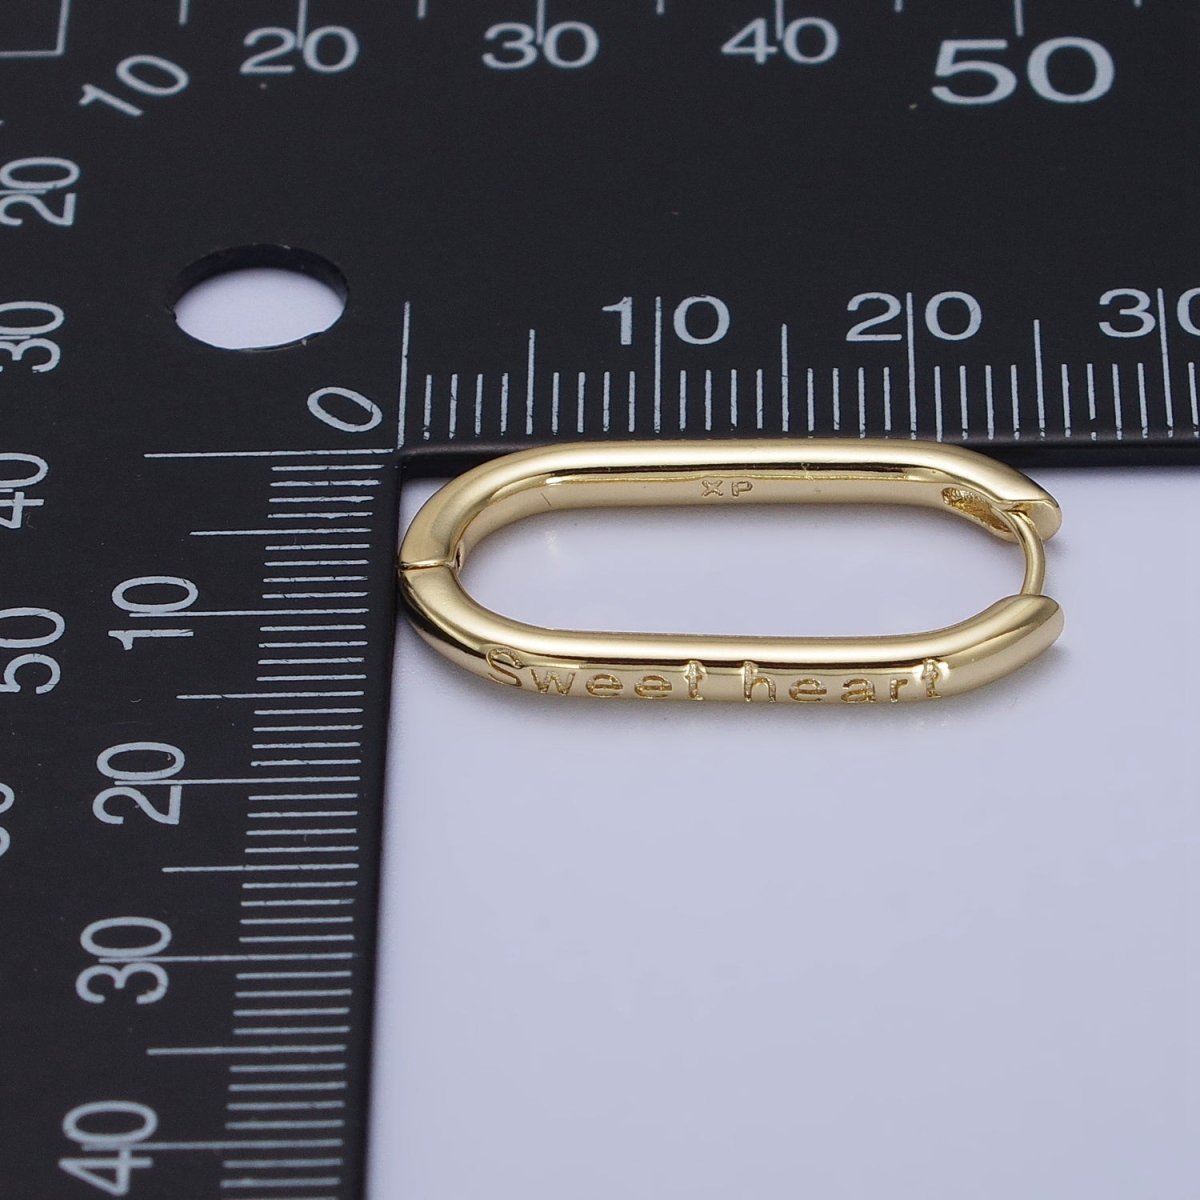 14K Gold Filled "Sweet heart" Engraved Oblong U-Shaped Hoop Earrings | AB434 - DLUXCA